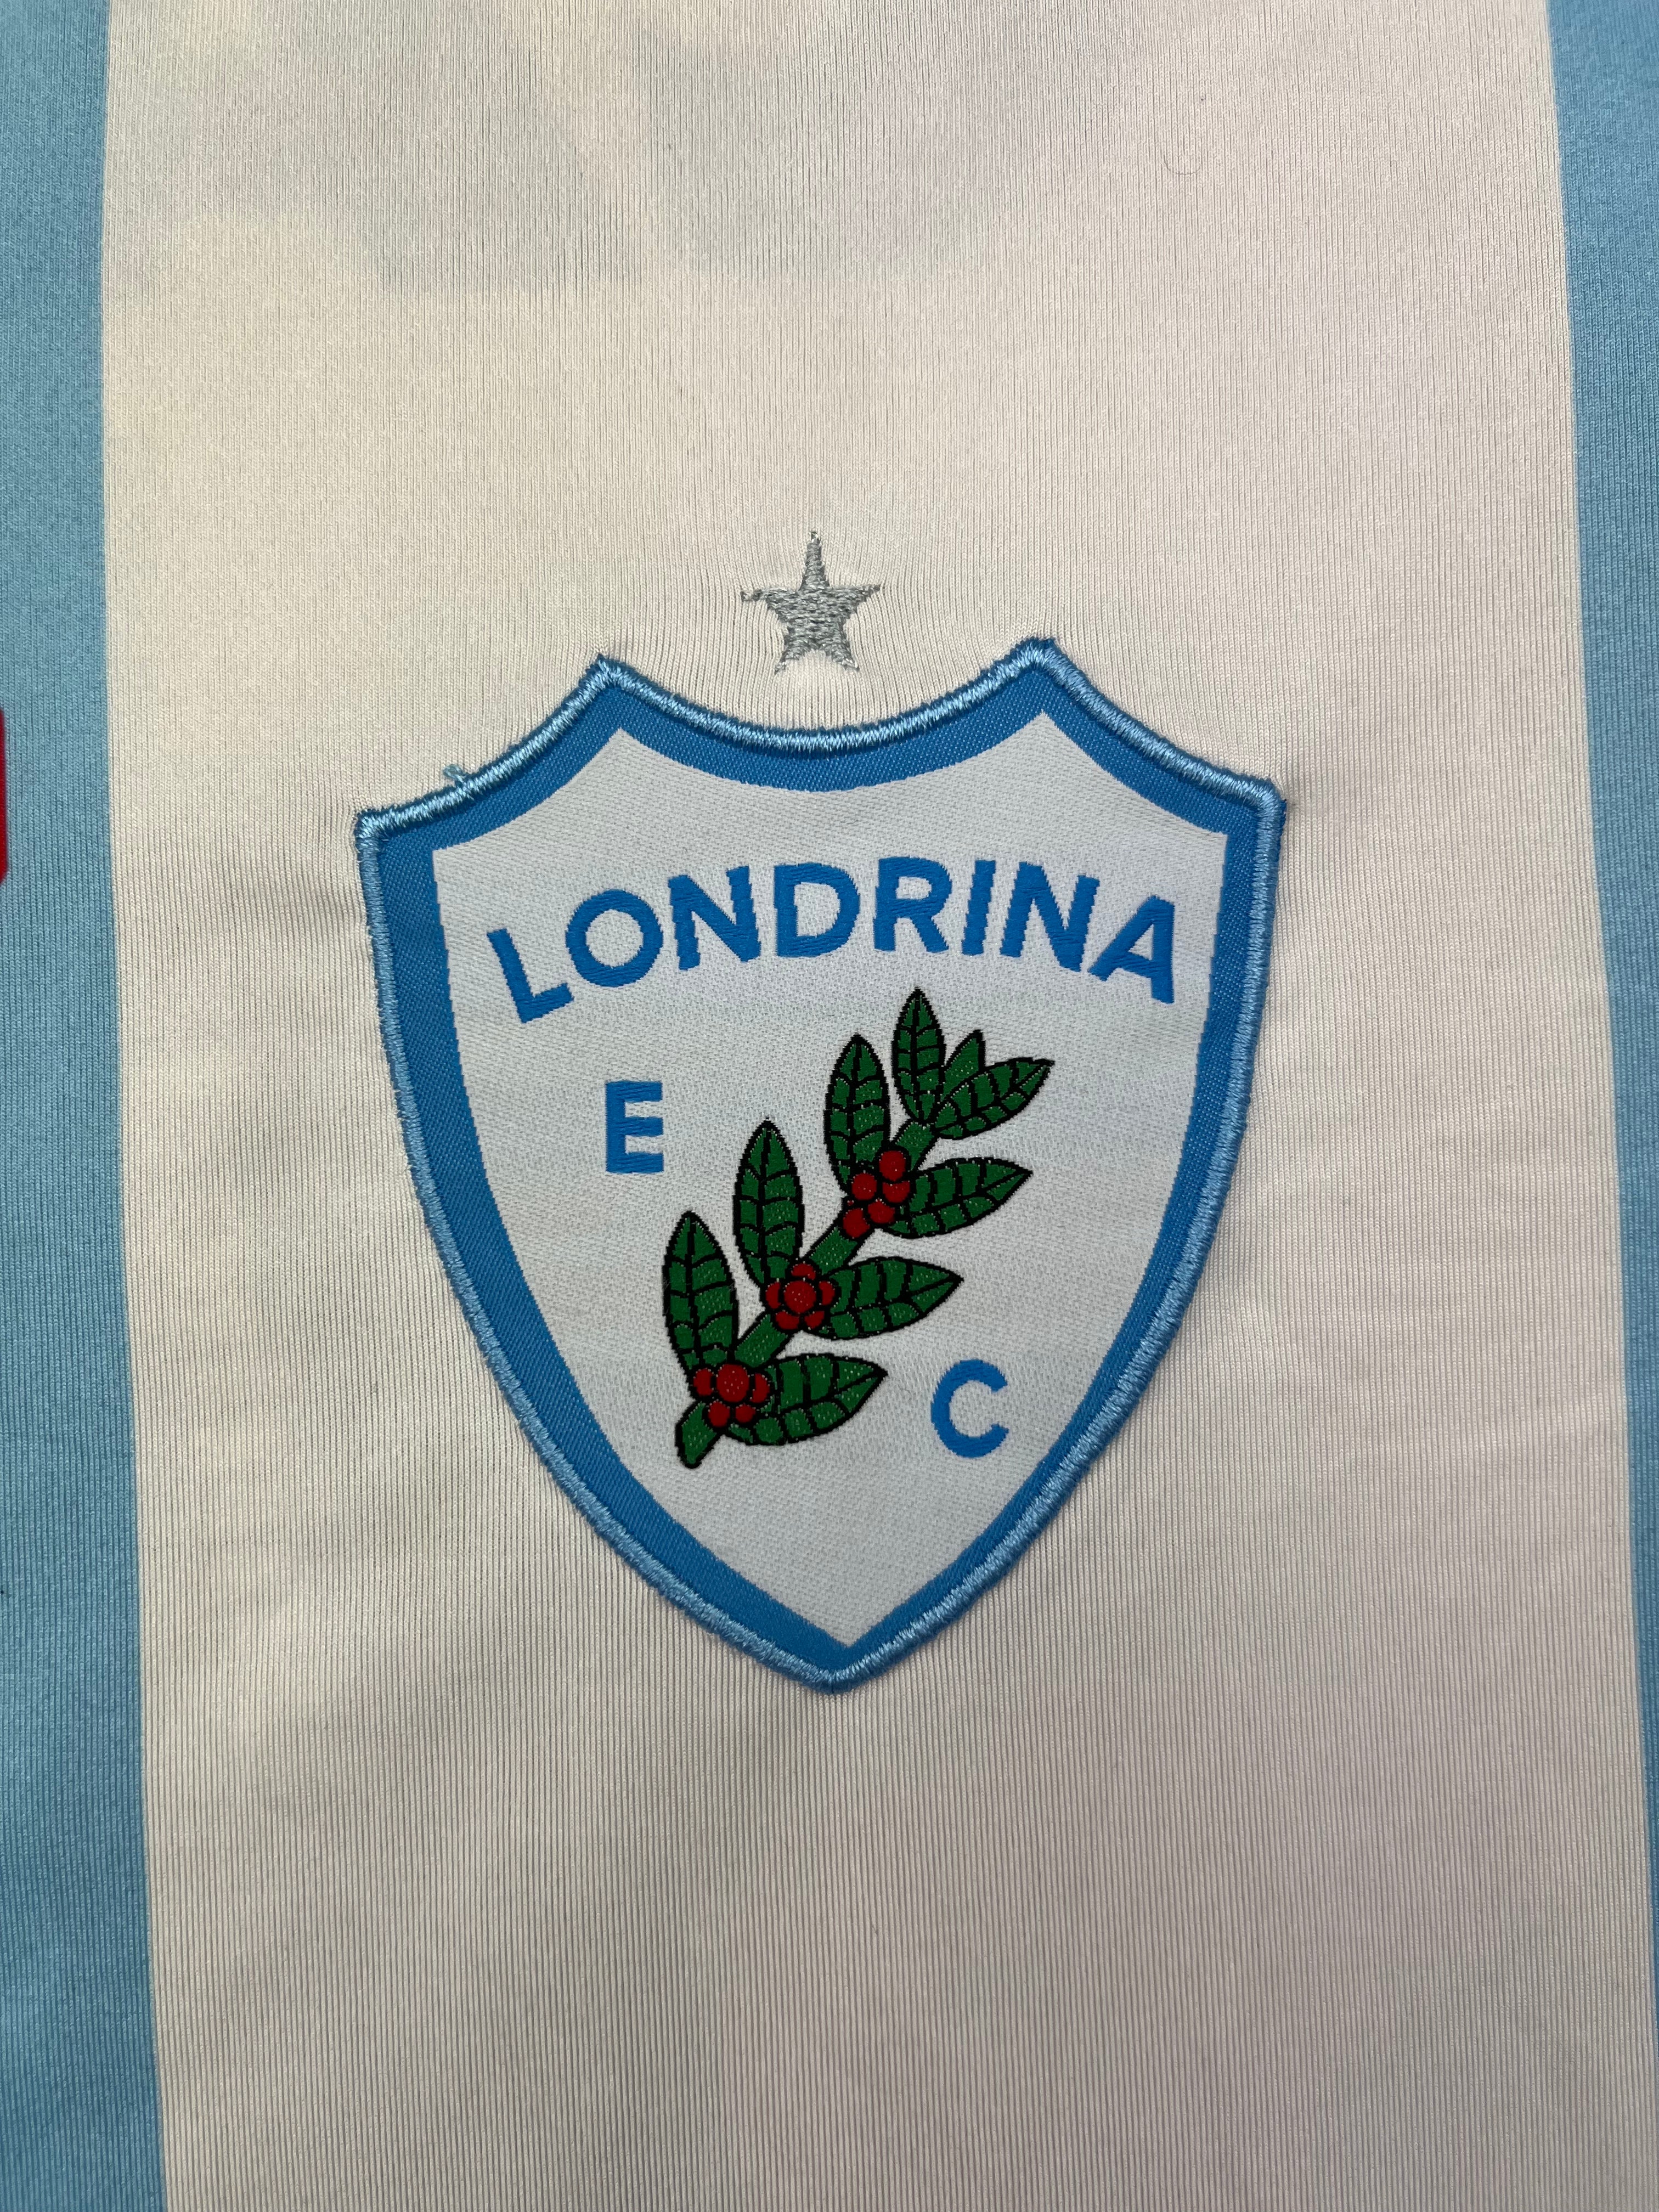 2018 Londrina Home Shirt #10 (XL) 9/10